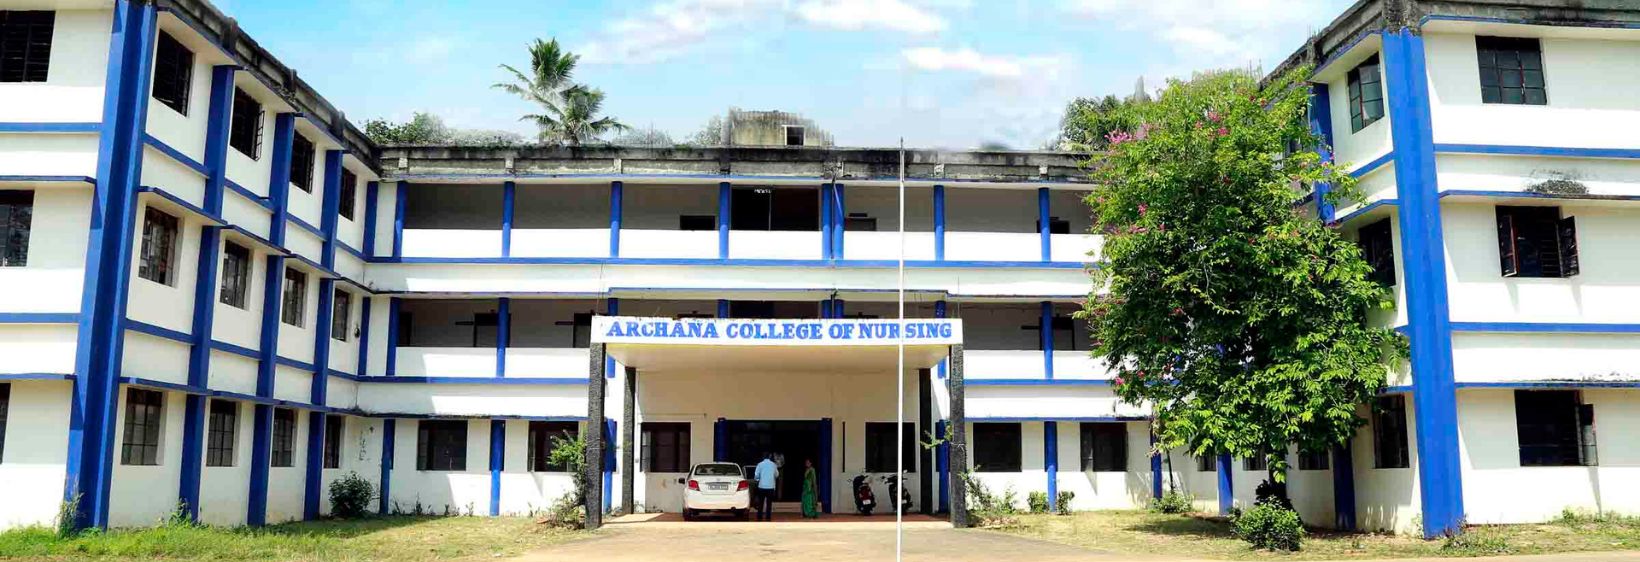 Archana College of Nursing - Pathanamthitta